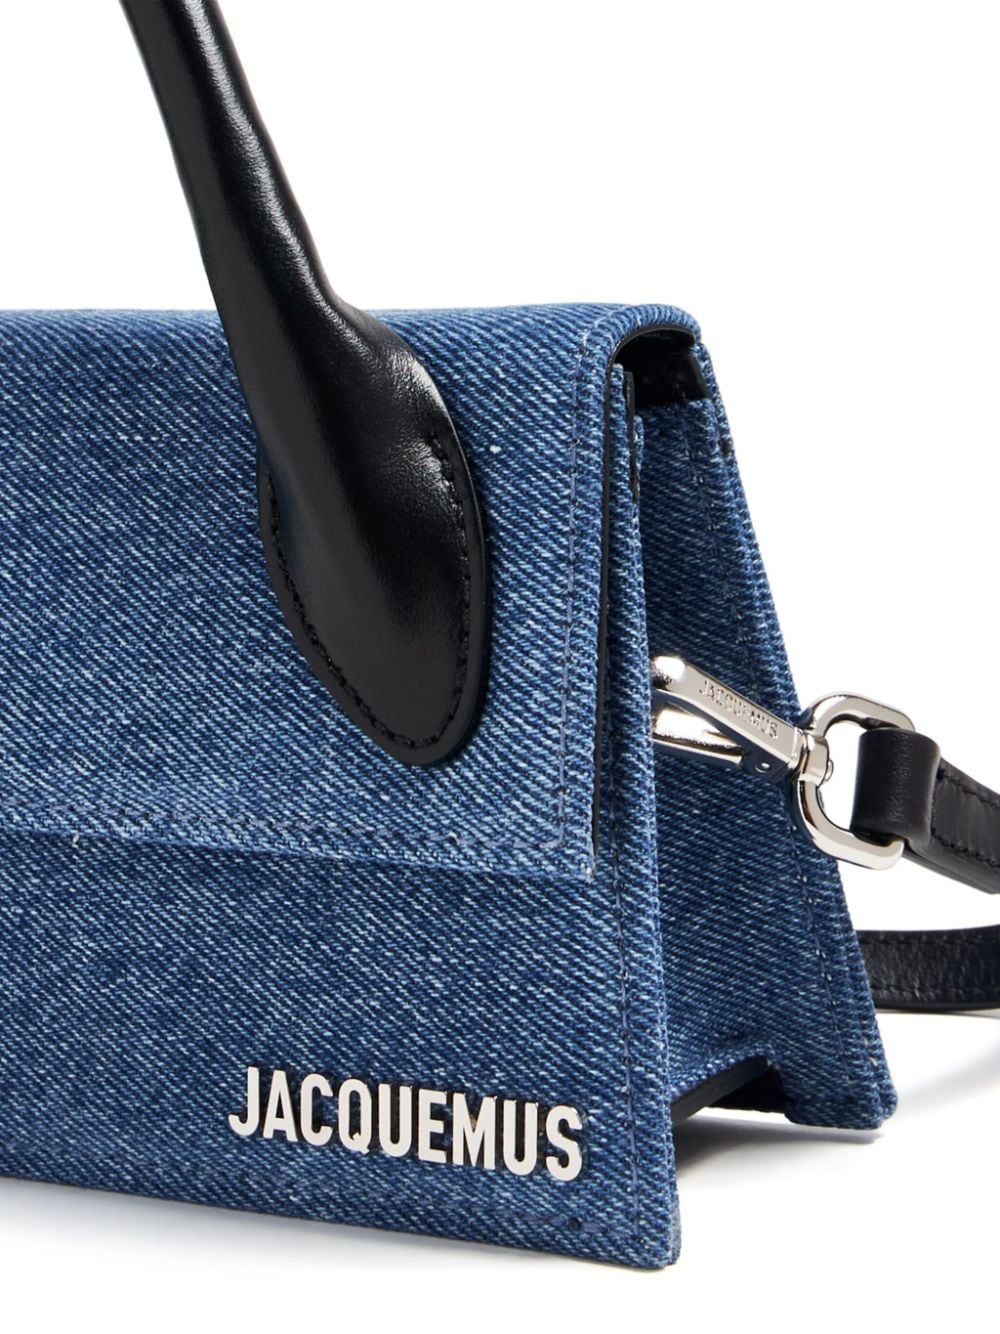 JACQUEMUS Mini Navy Denim & Leather Handbag with Silver-Tone Accents